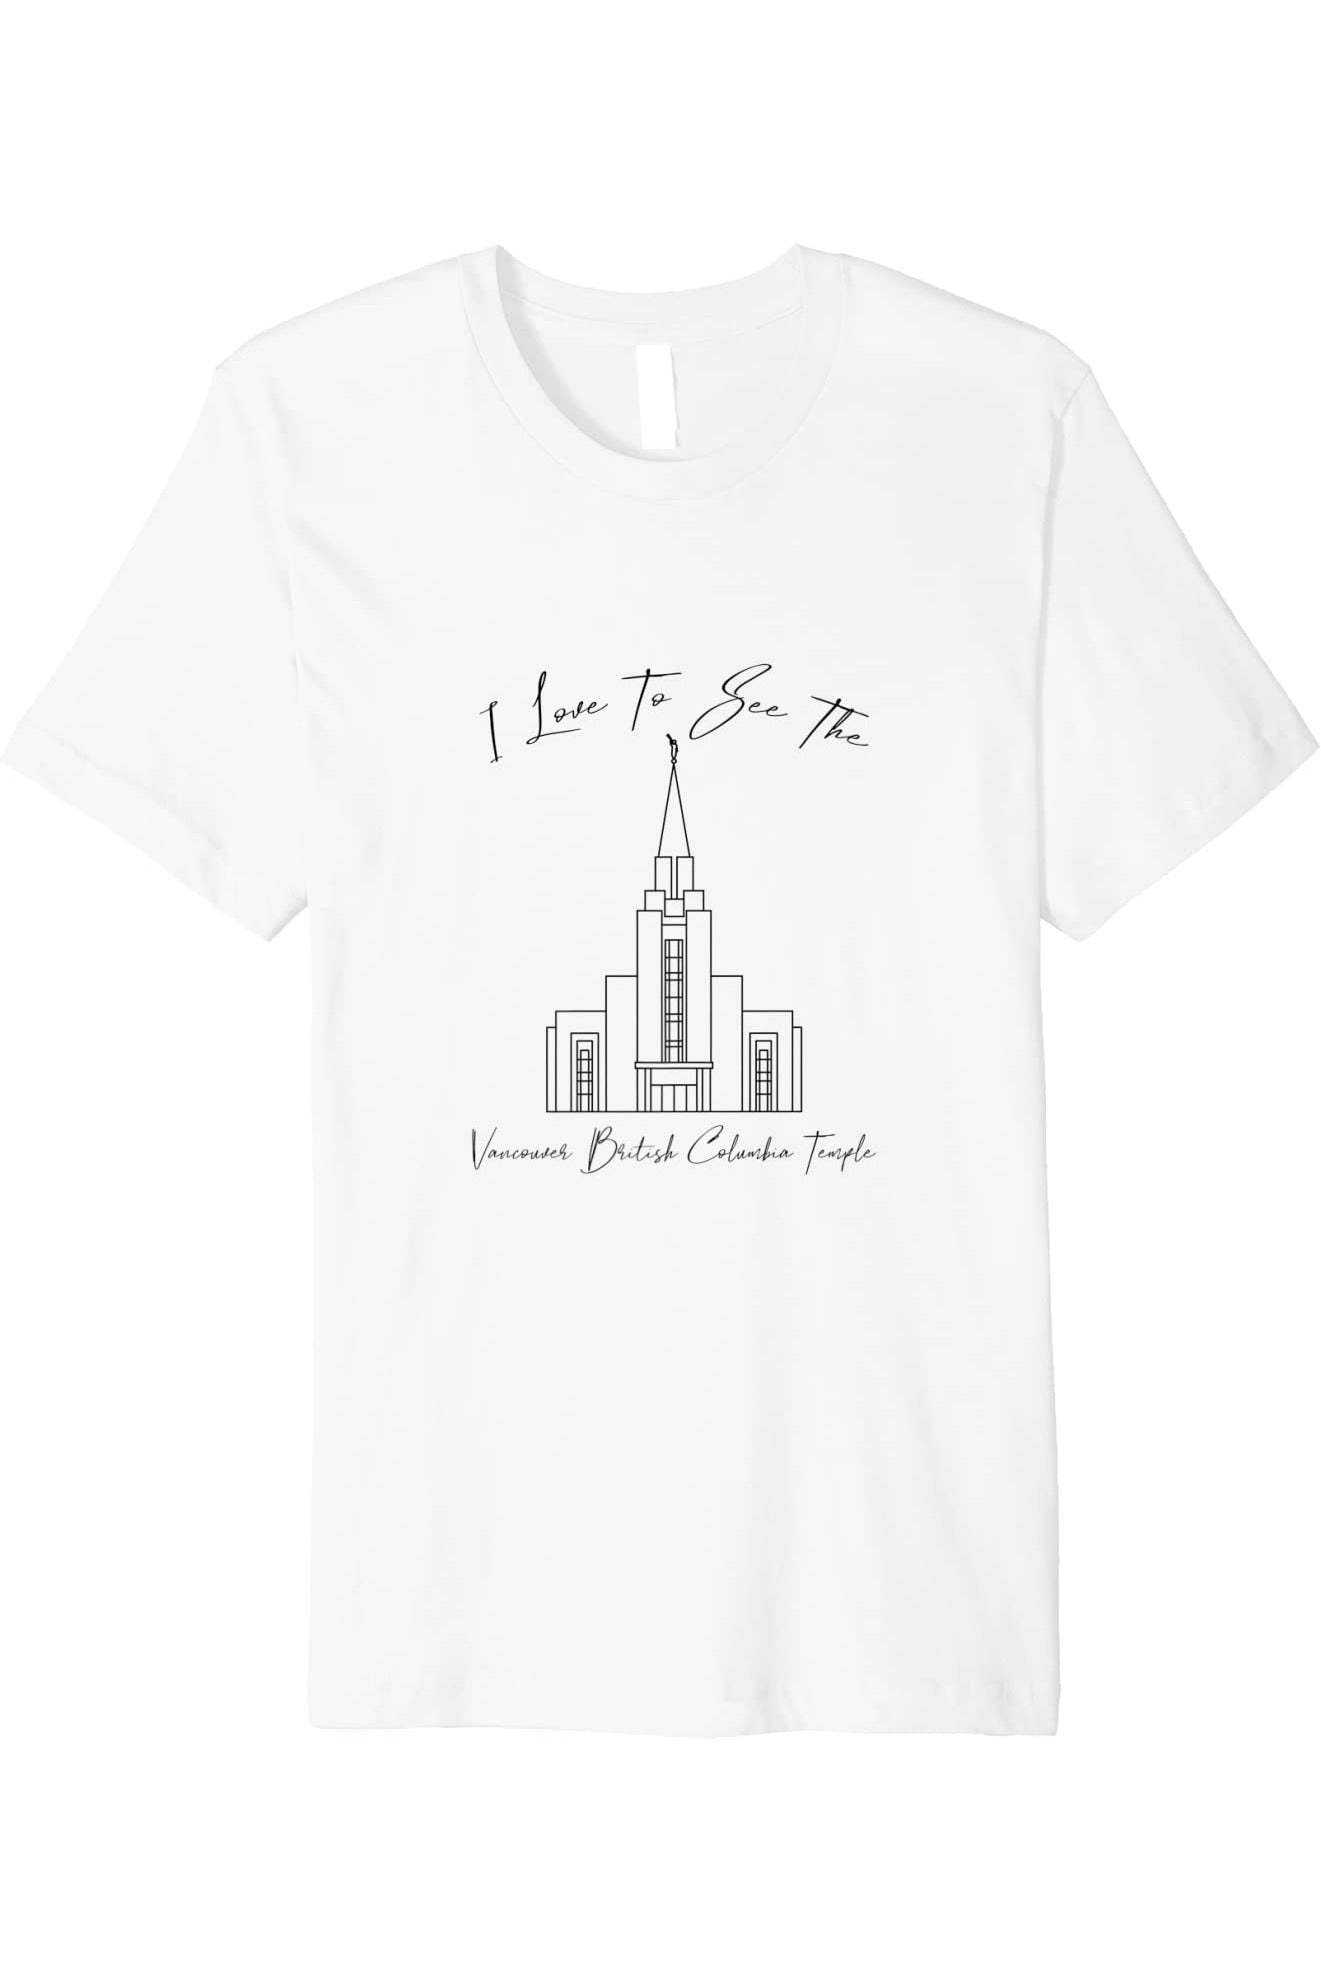 Vancouver British Columbia Temple T-Shirt - Premium - Calligraphy Style (English) US